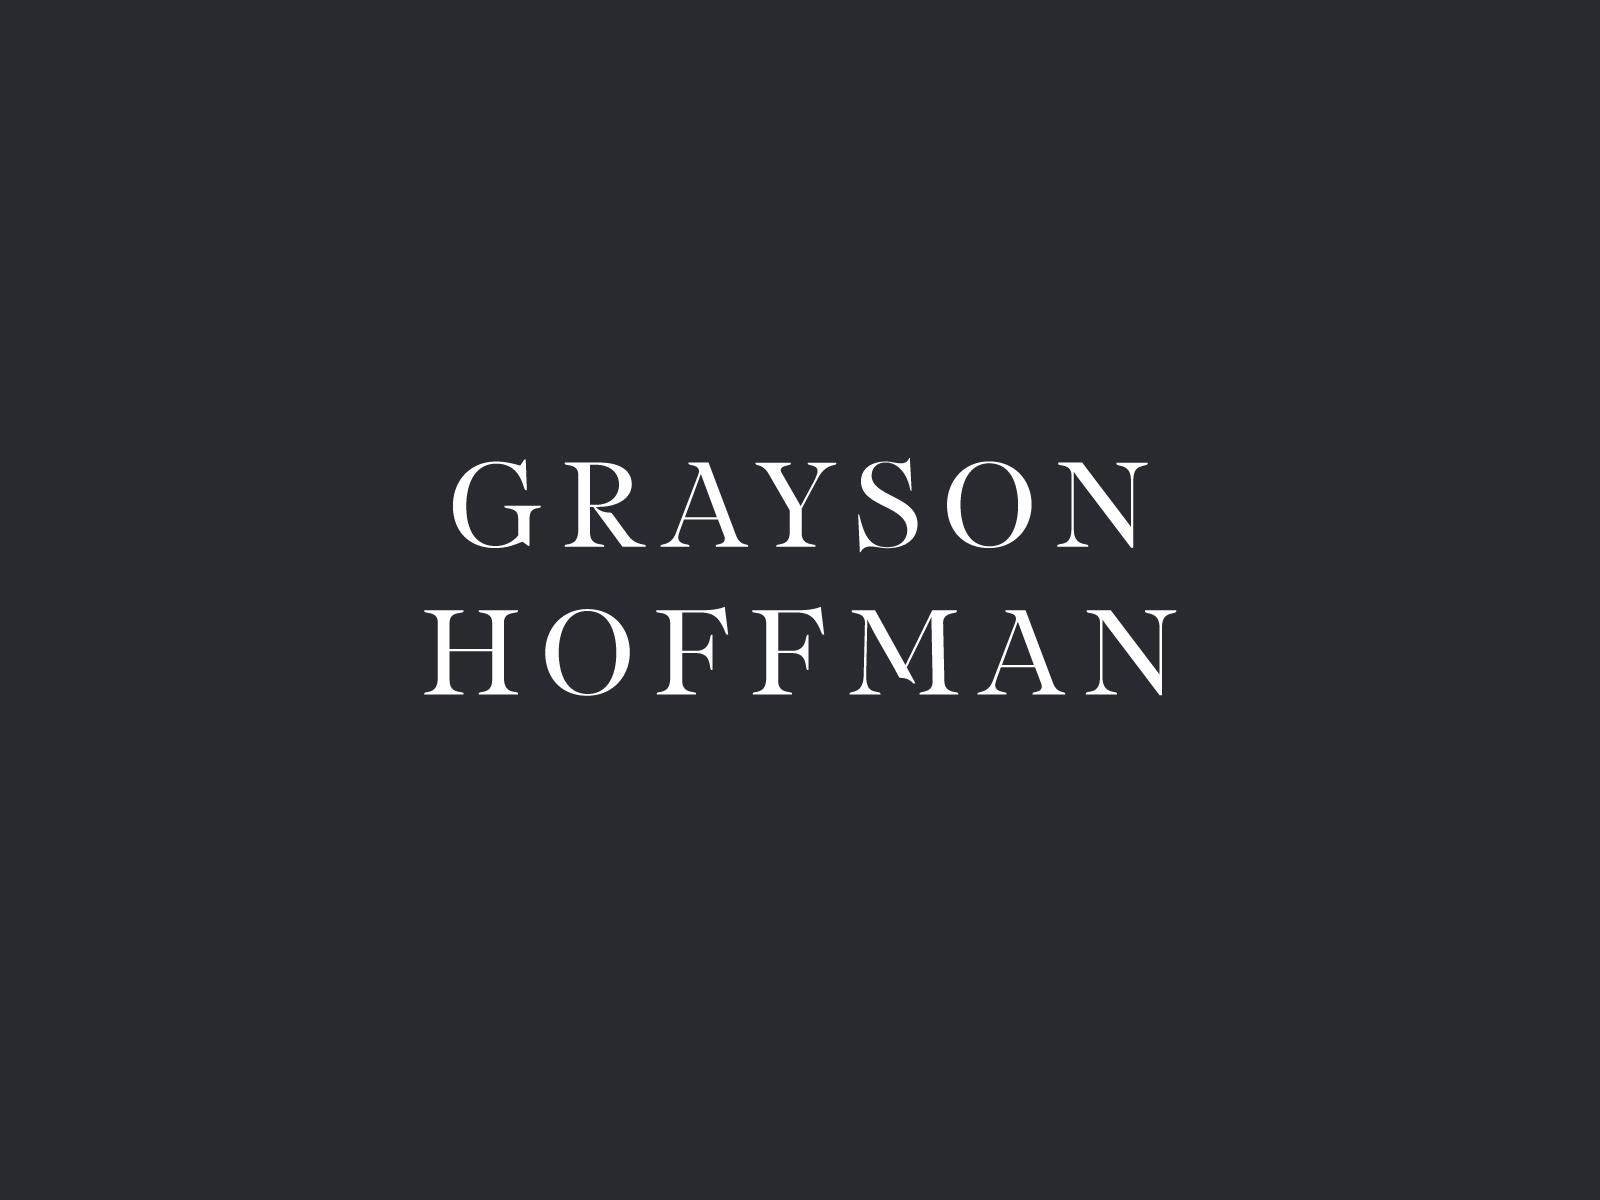 Grayson Hoffman